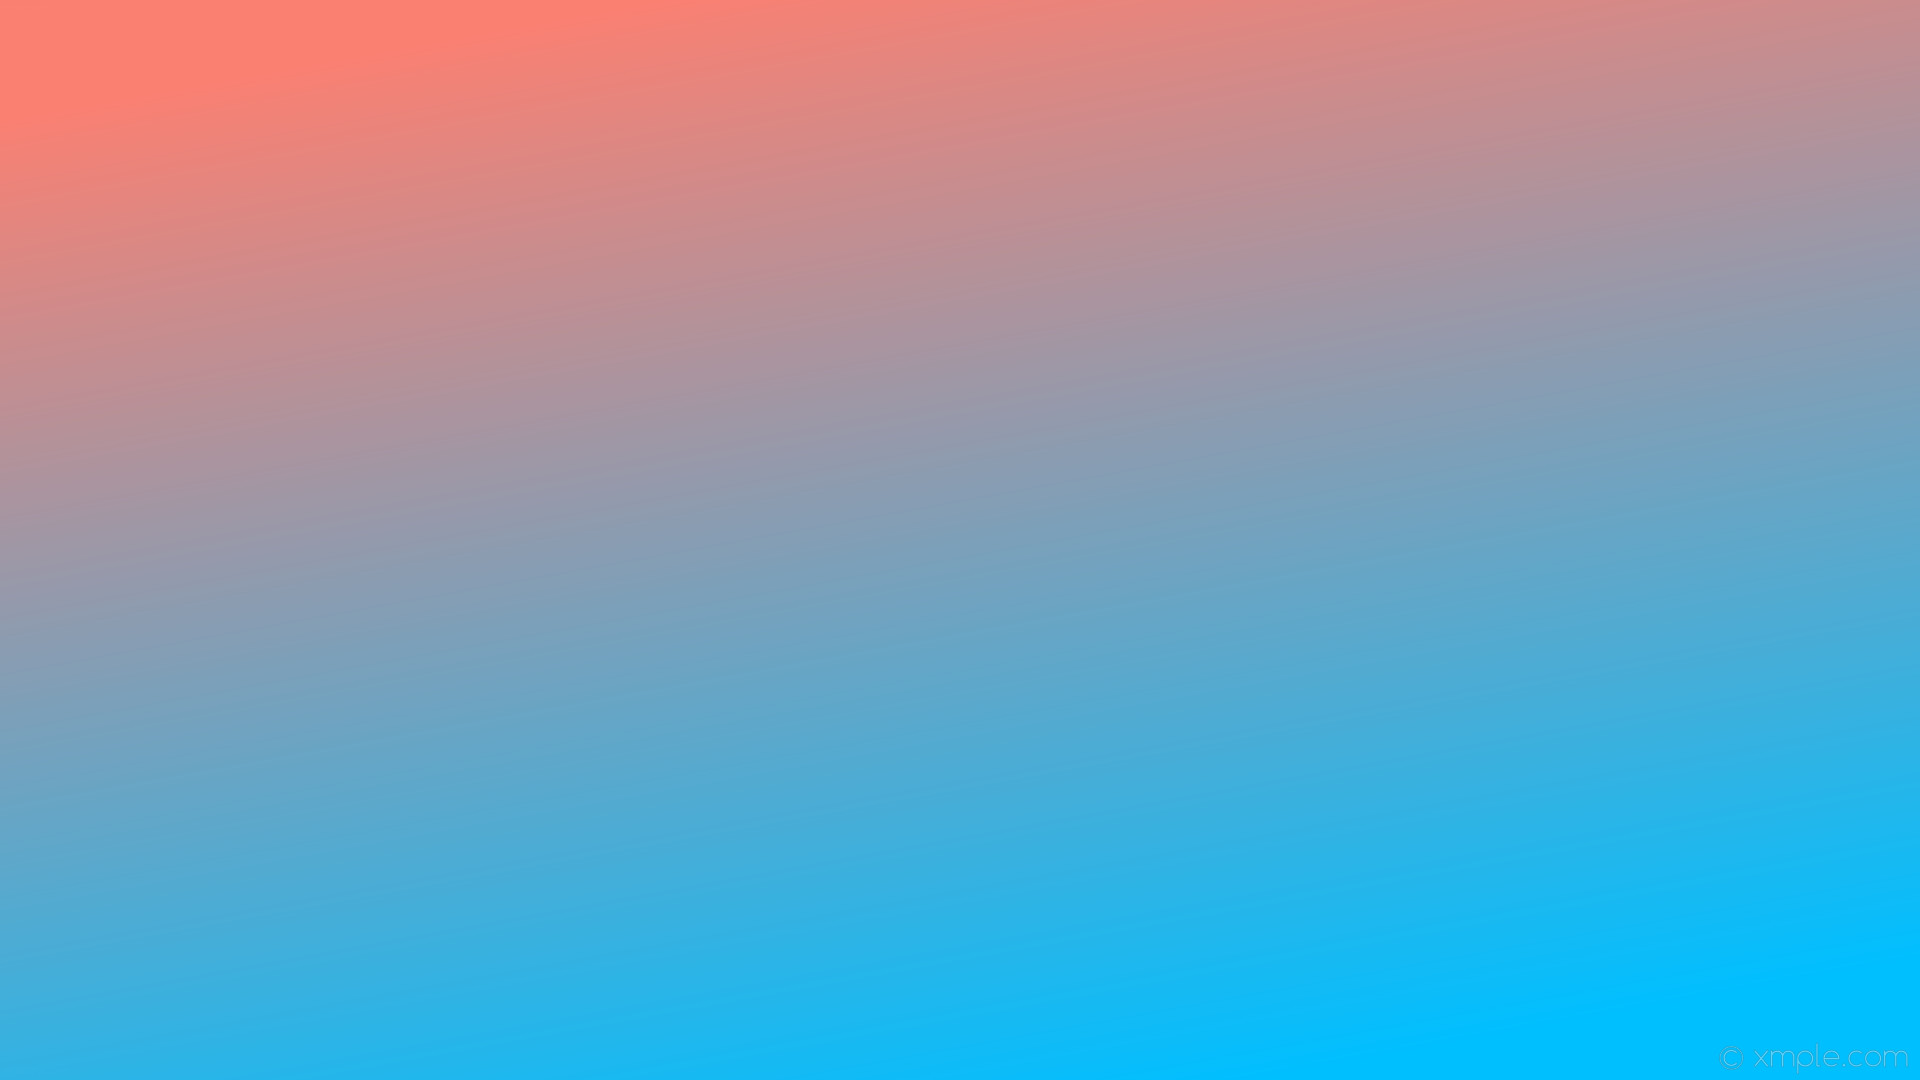 1920x1080 wallpaper red linear blue gradient salmon deep sky blue #fa8072 #00bfff 120Â°